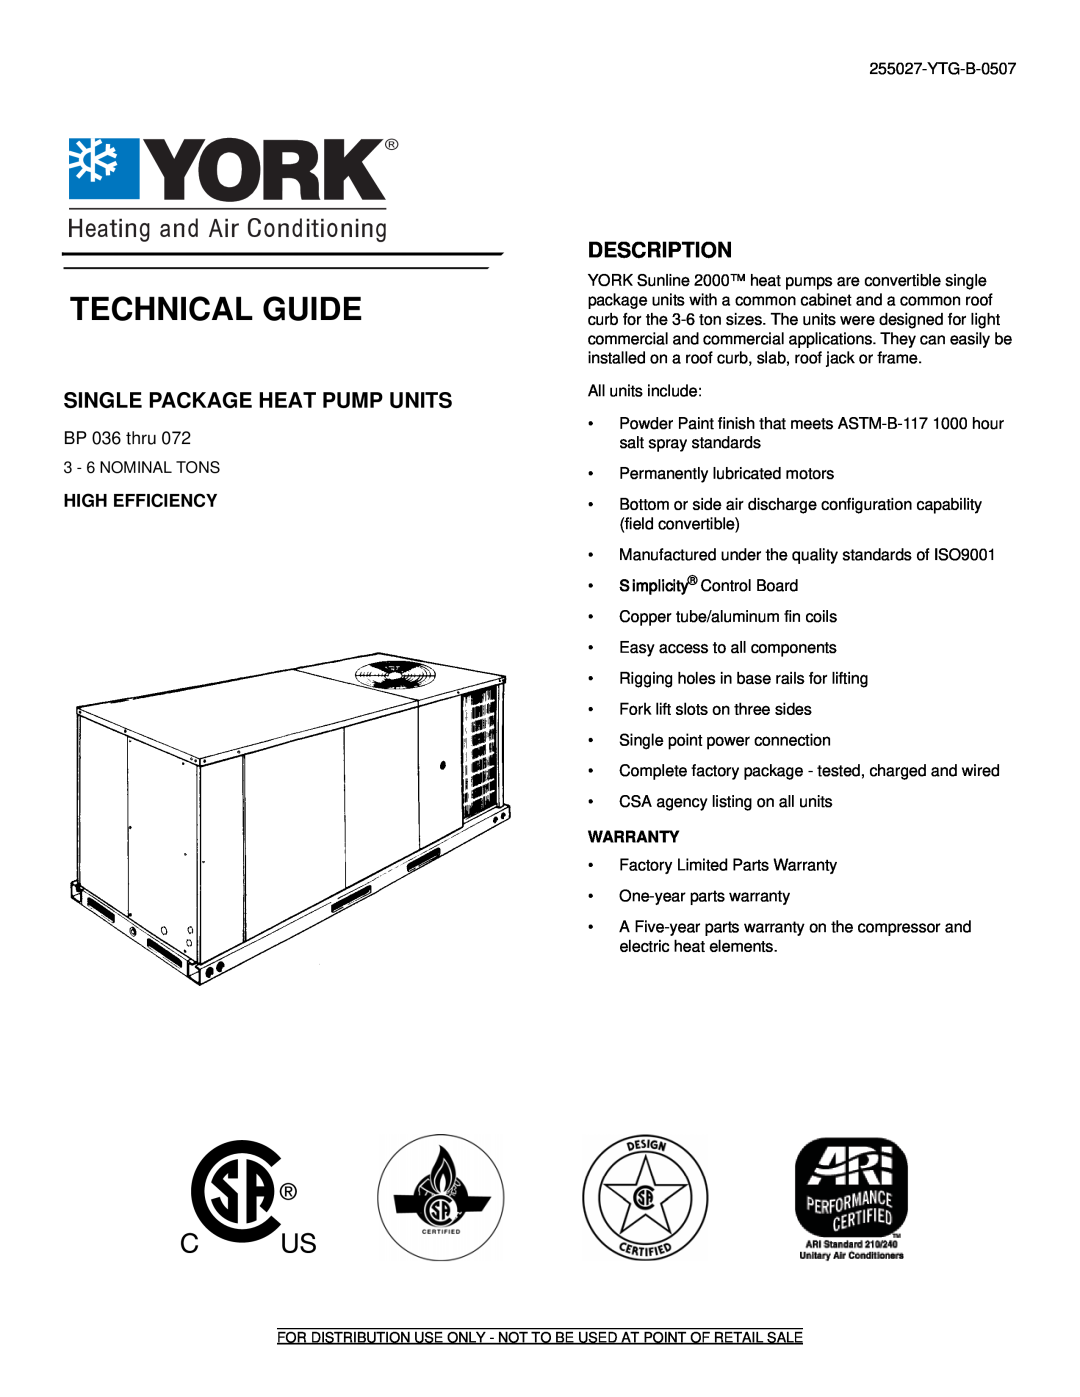 York warranty Single Package Heat Pump Units, Description, BP 036 thru, High Efficiency, Technical Guide 